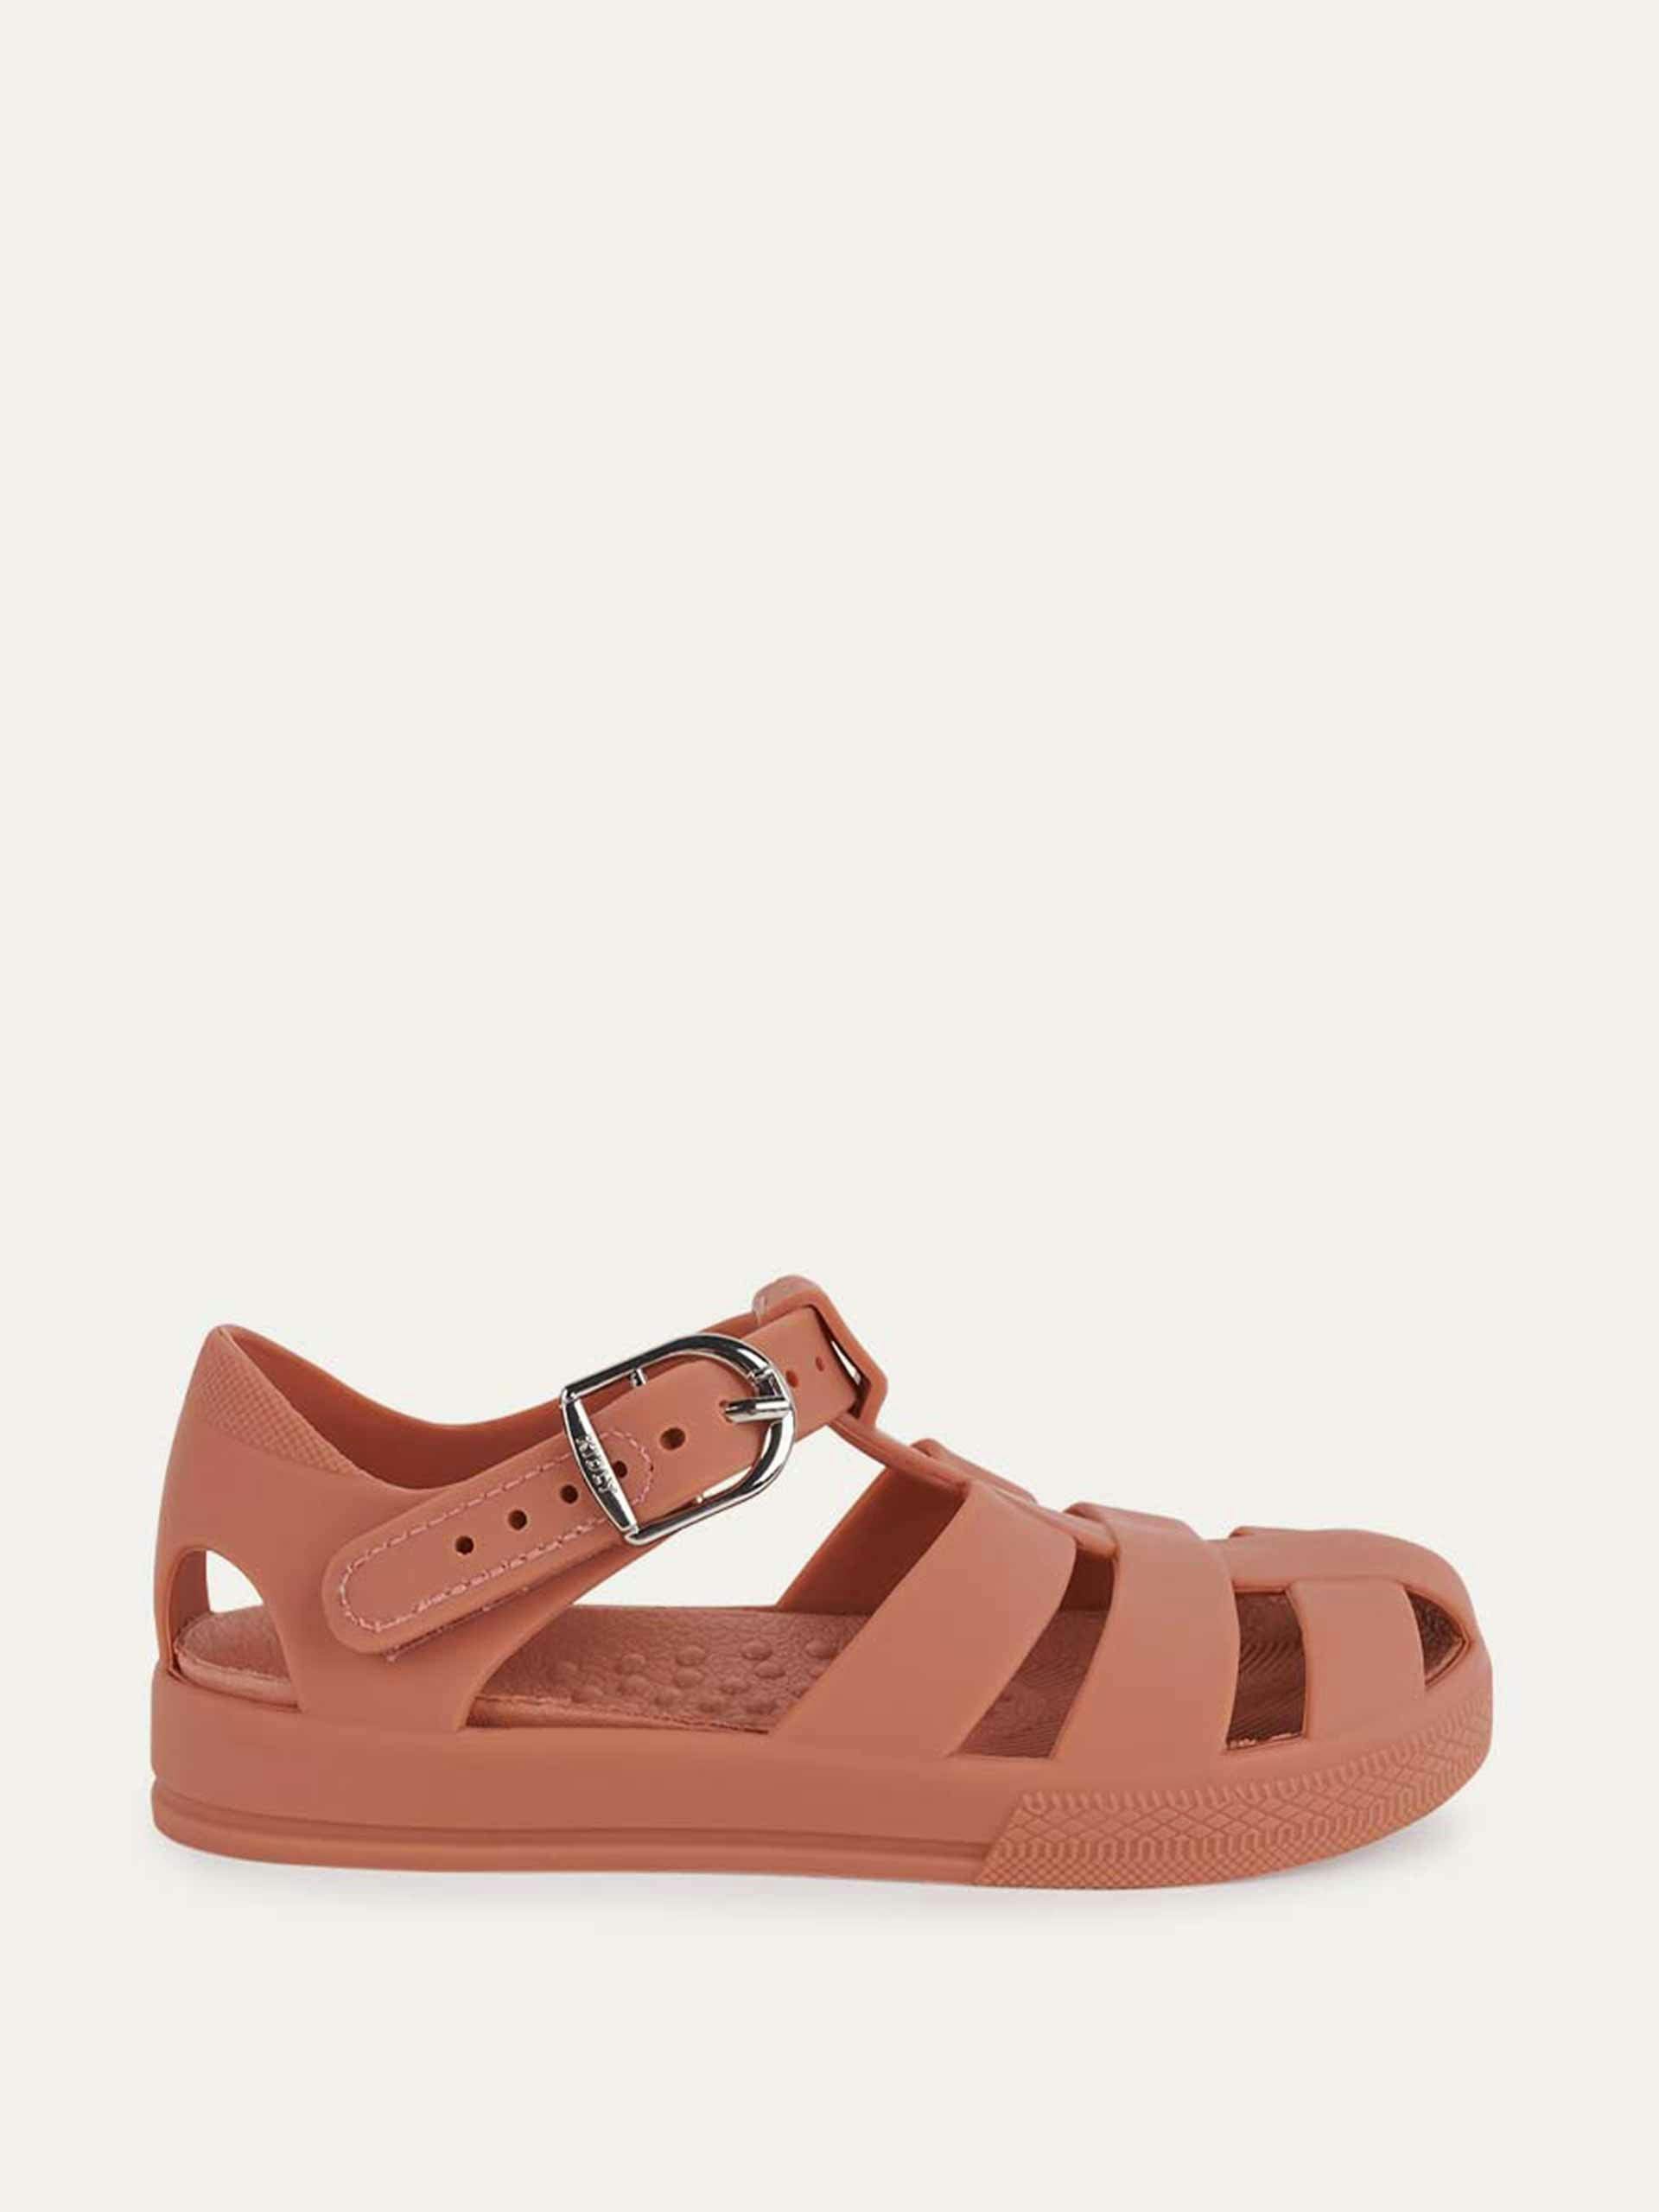 Terracotta jelly sandals